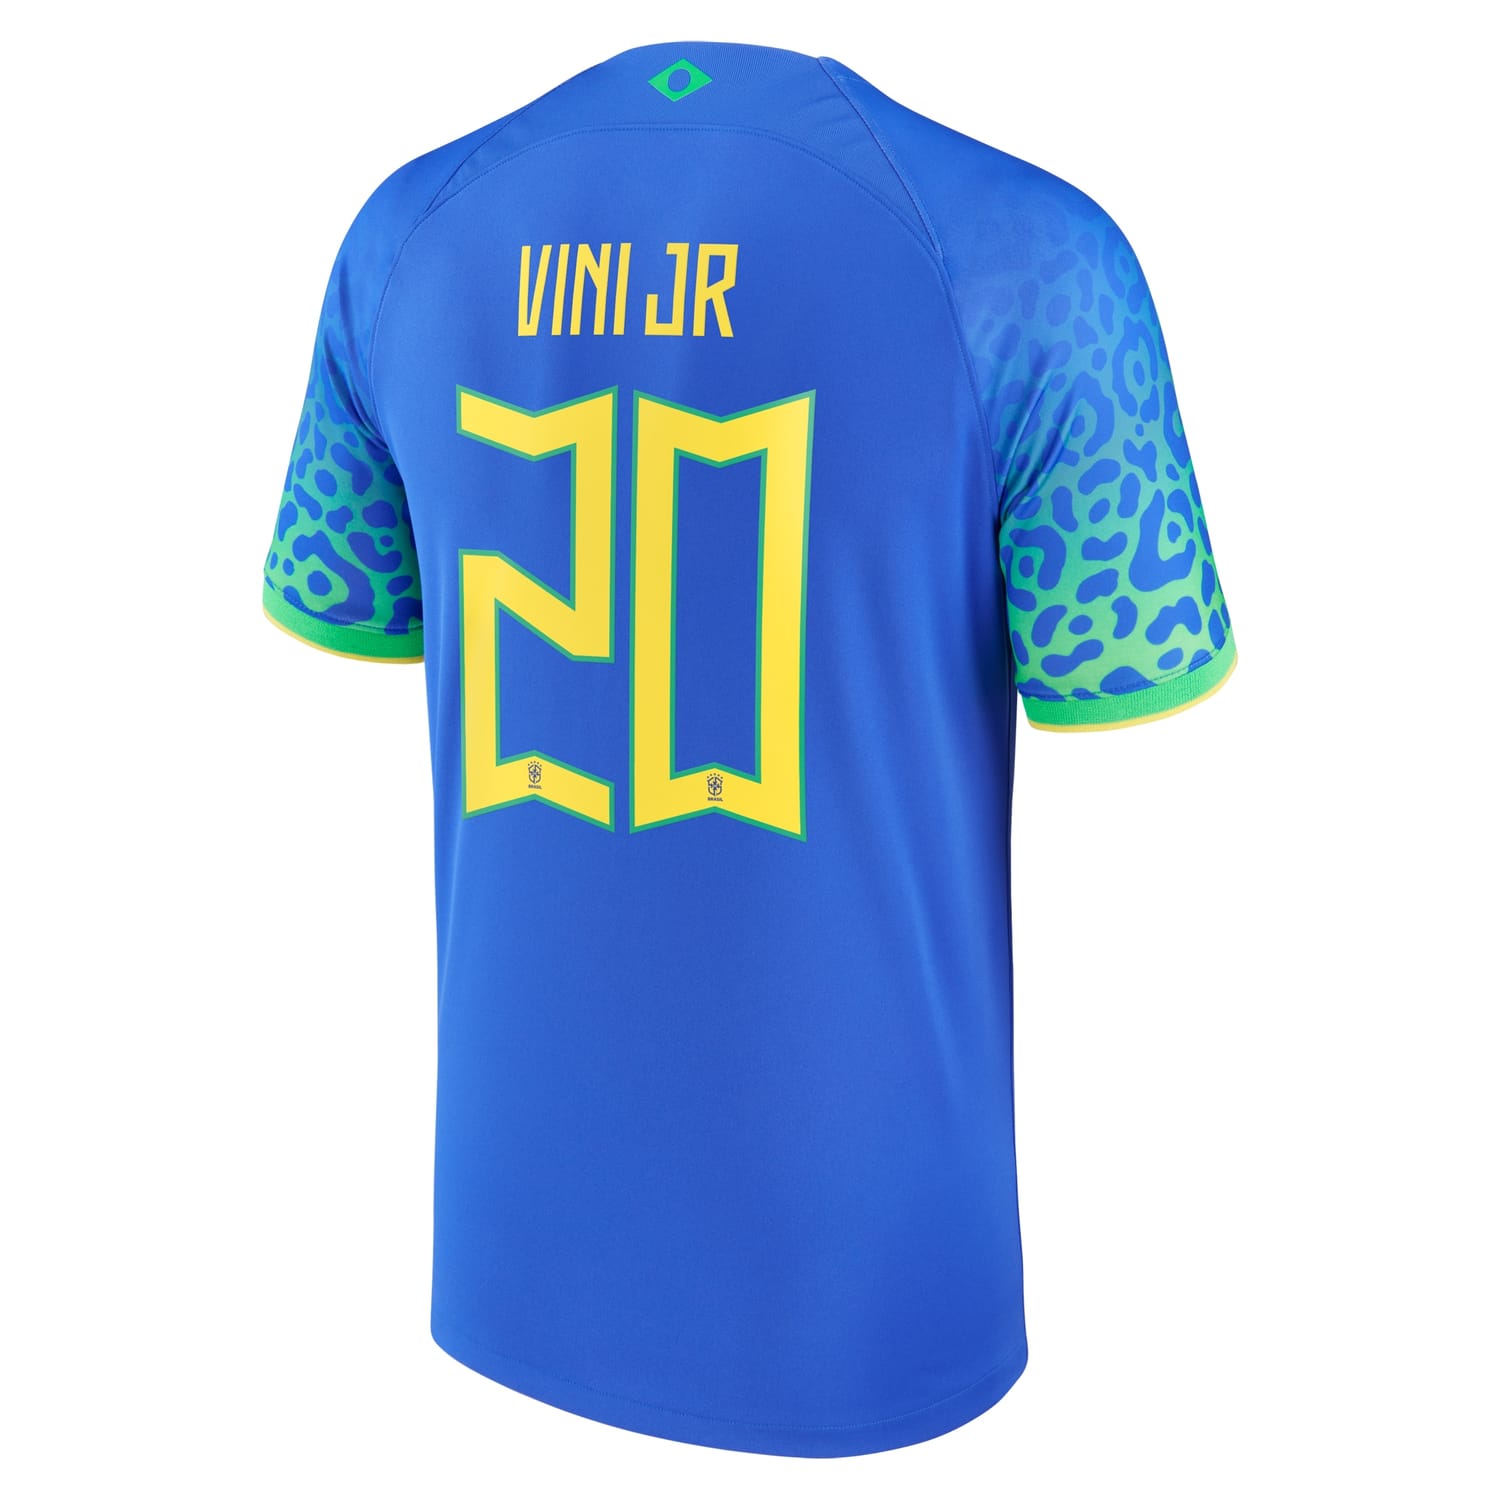 Brazil National Team Away Jersey Shirt Blue 2022-23 player Vinicius Junior printing for Men